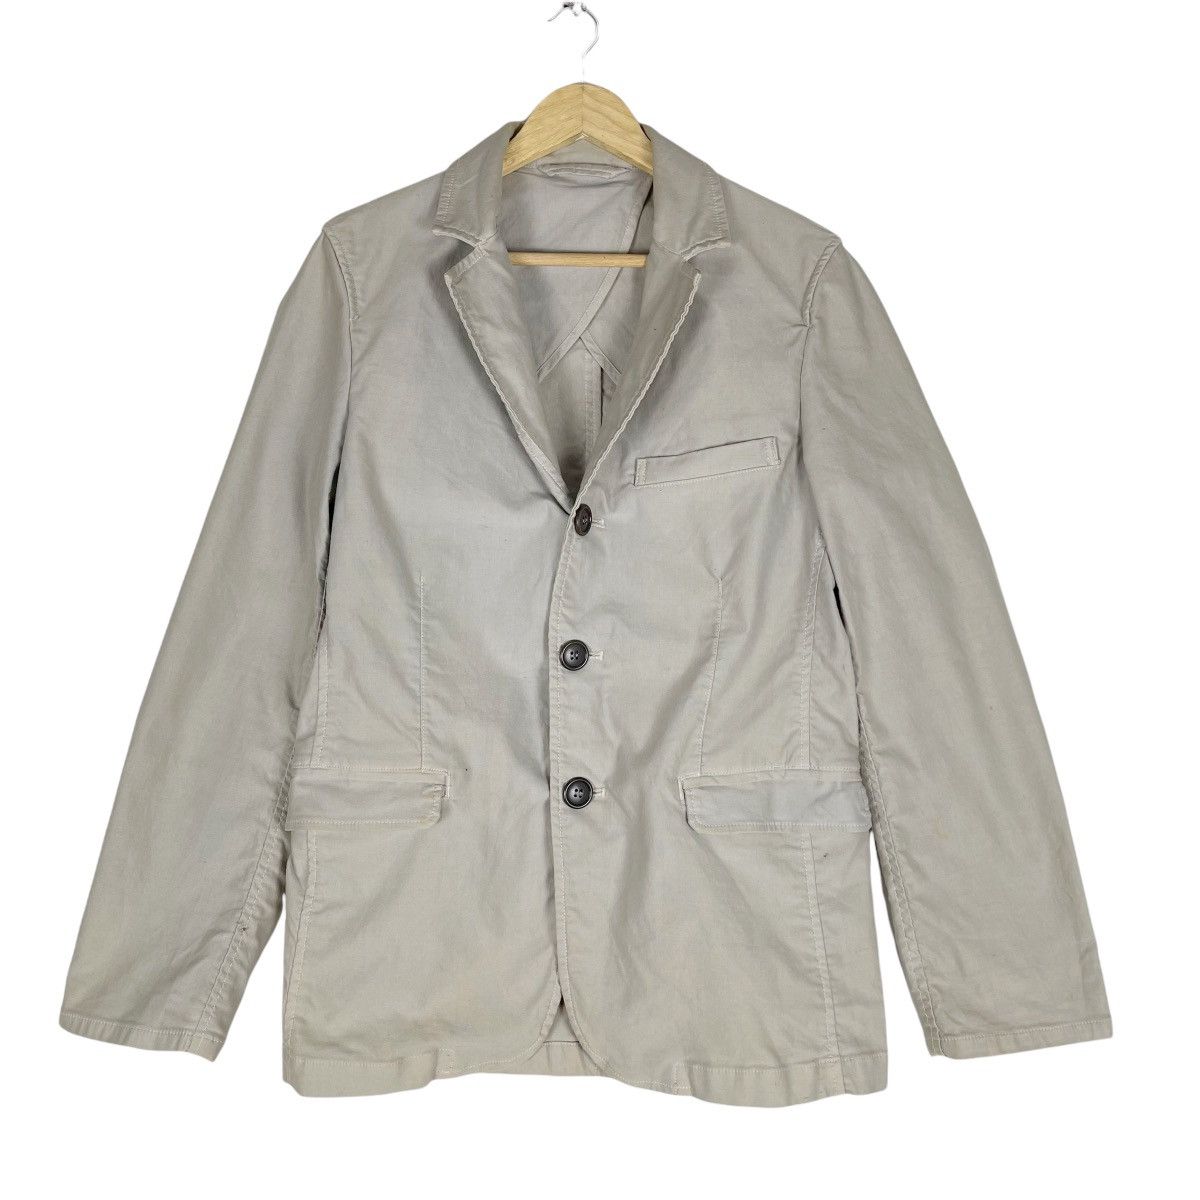 🔥HR Market Japan Workwear Jacket - 2